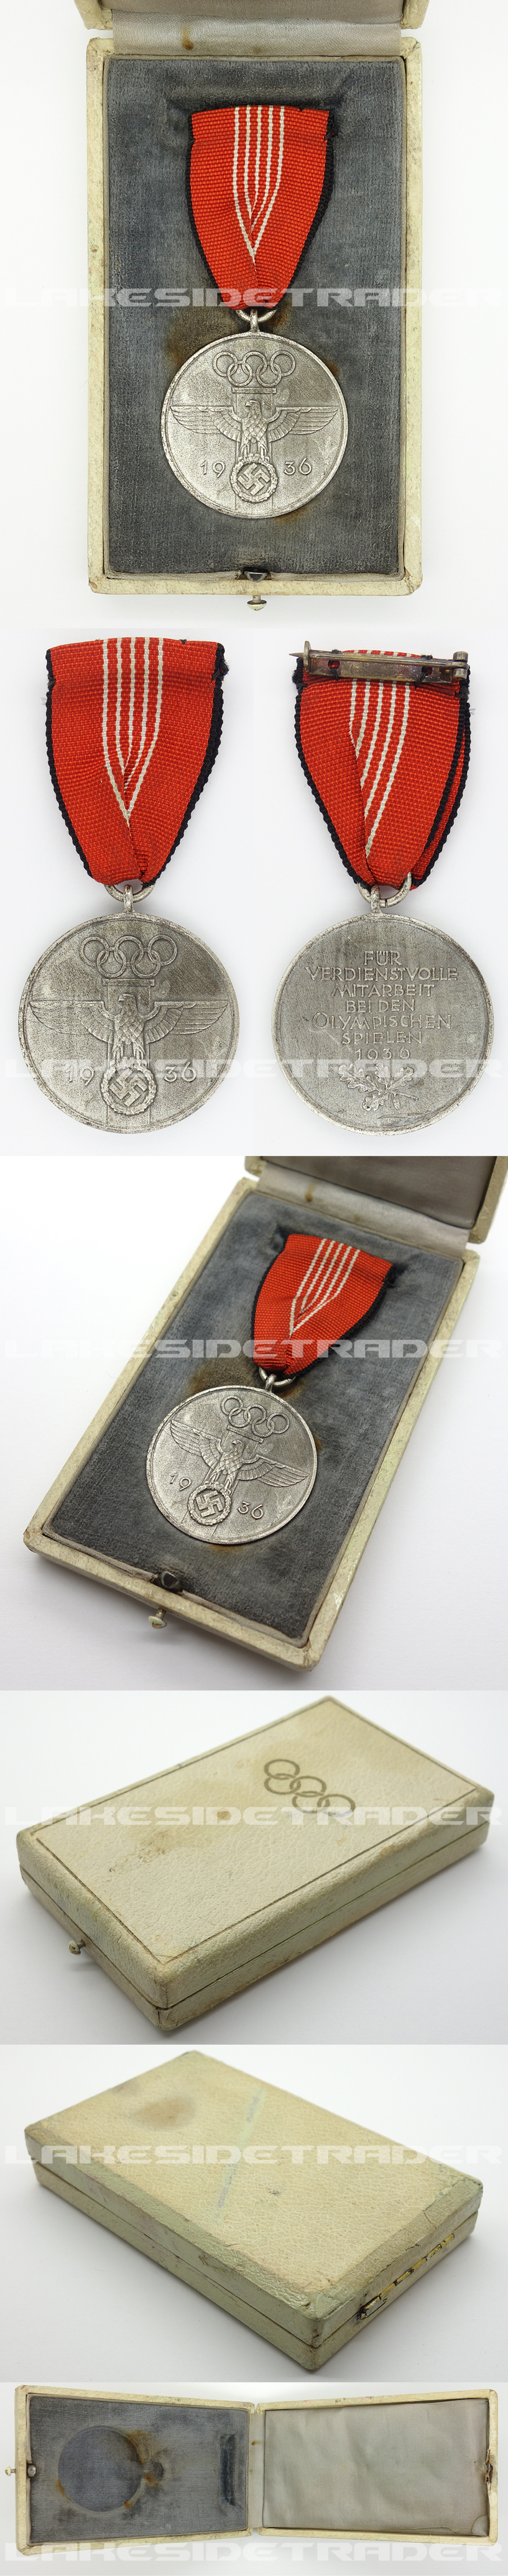 Cased Olympic Memorial Medal 1936